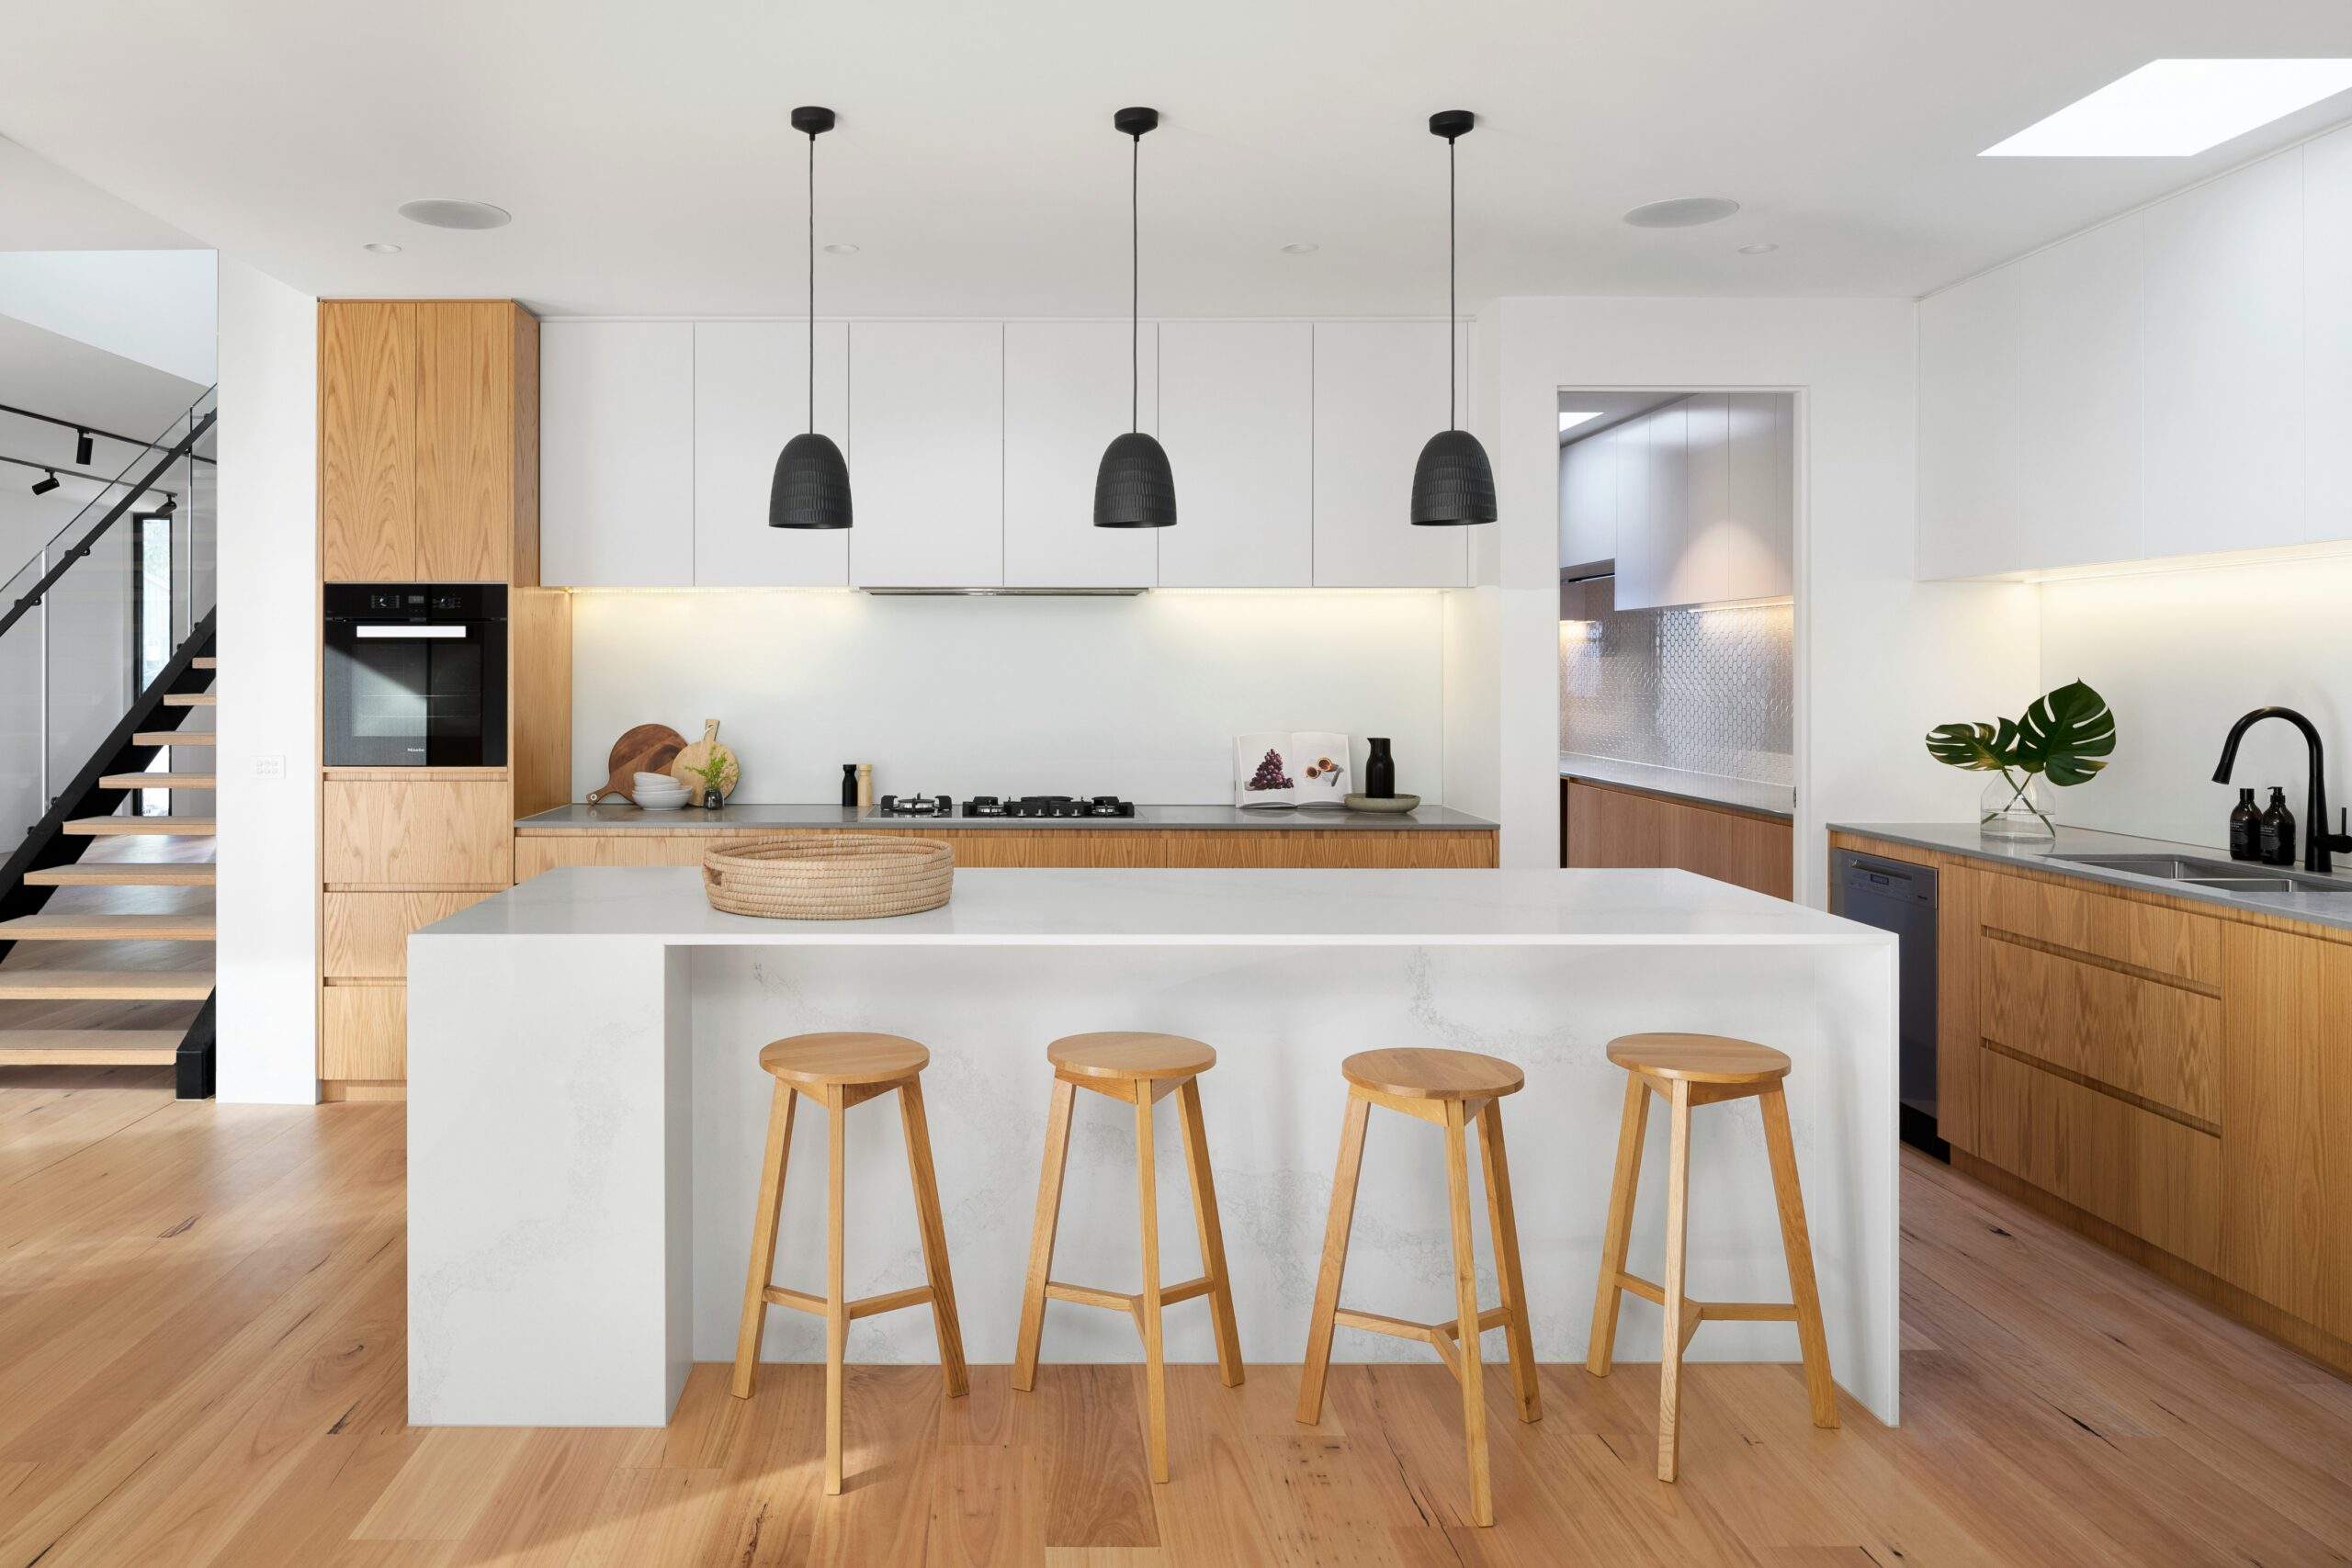 remodeled kitchen courtesy of Beaver Home Design